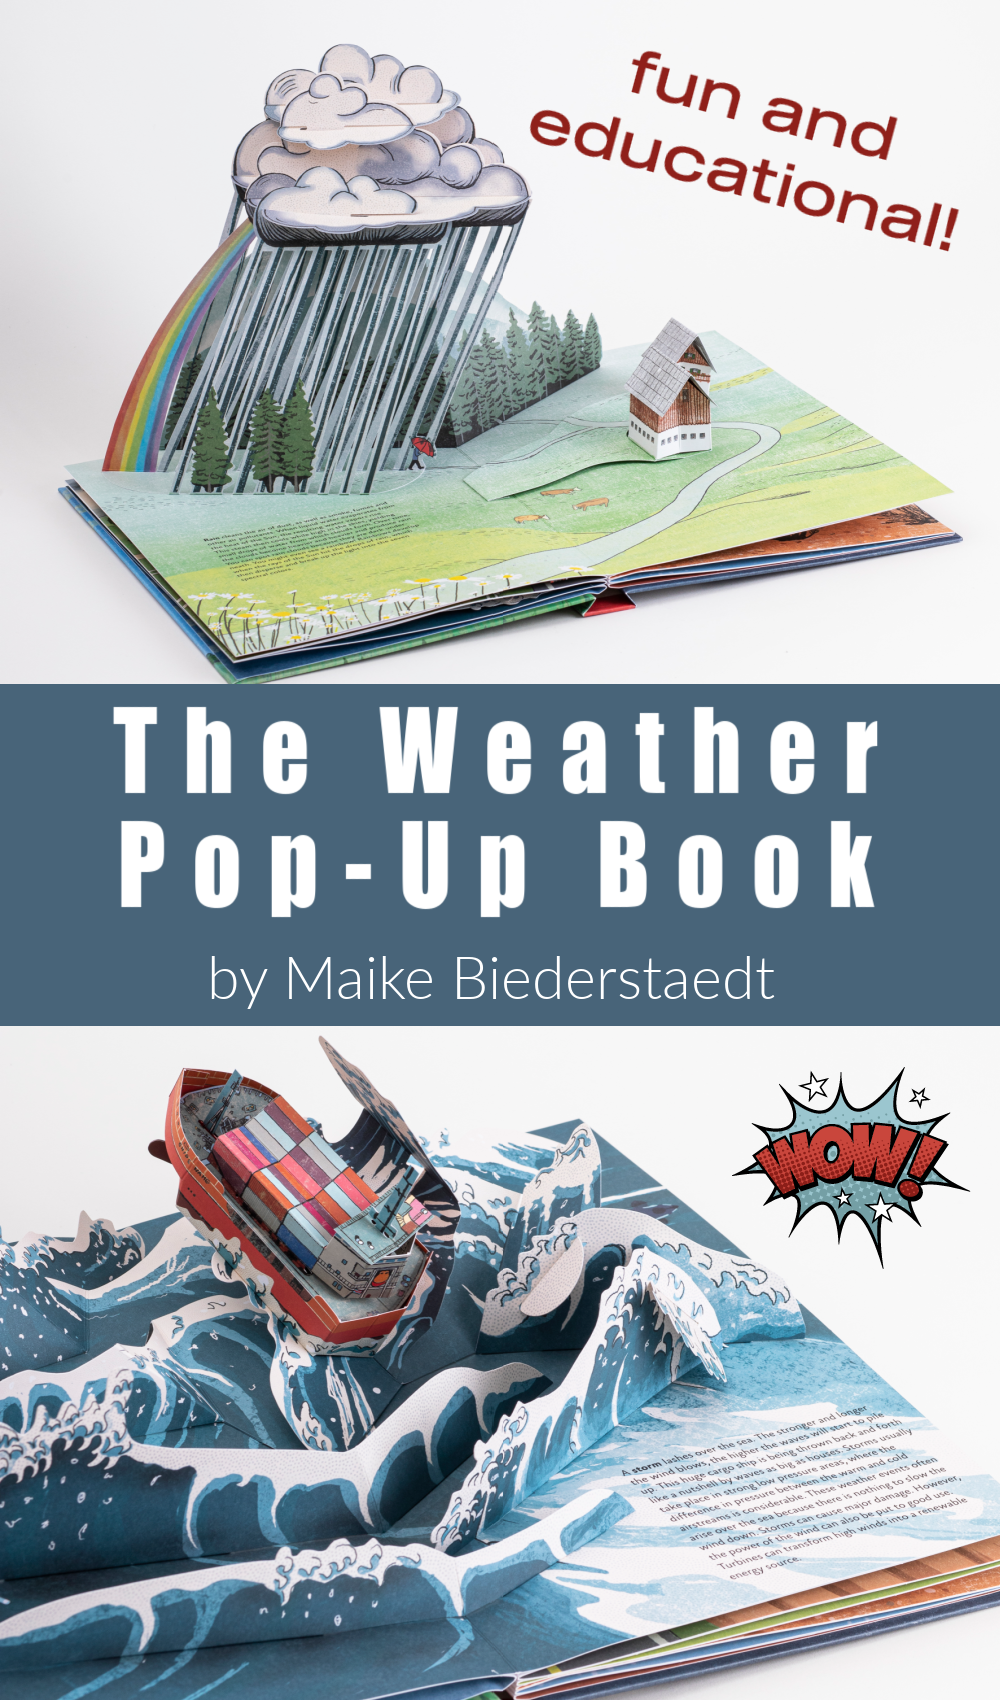 The Weather Pop-Up Book by Maike Biederstaedt: